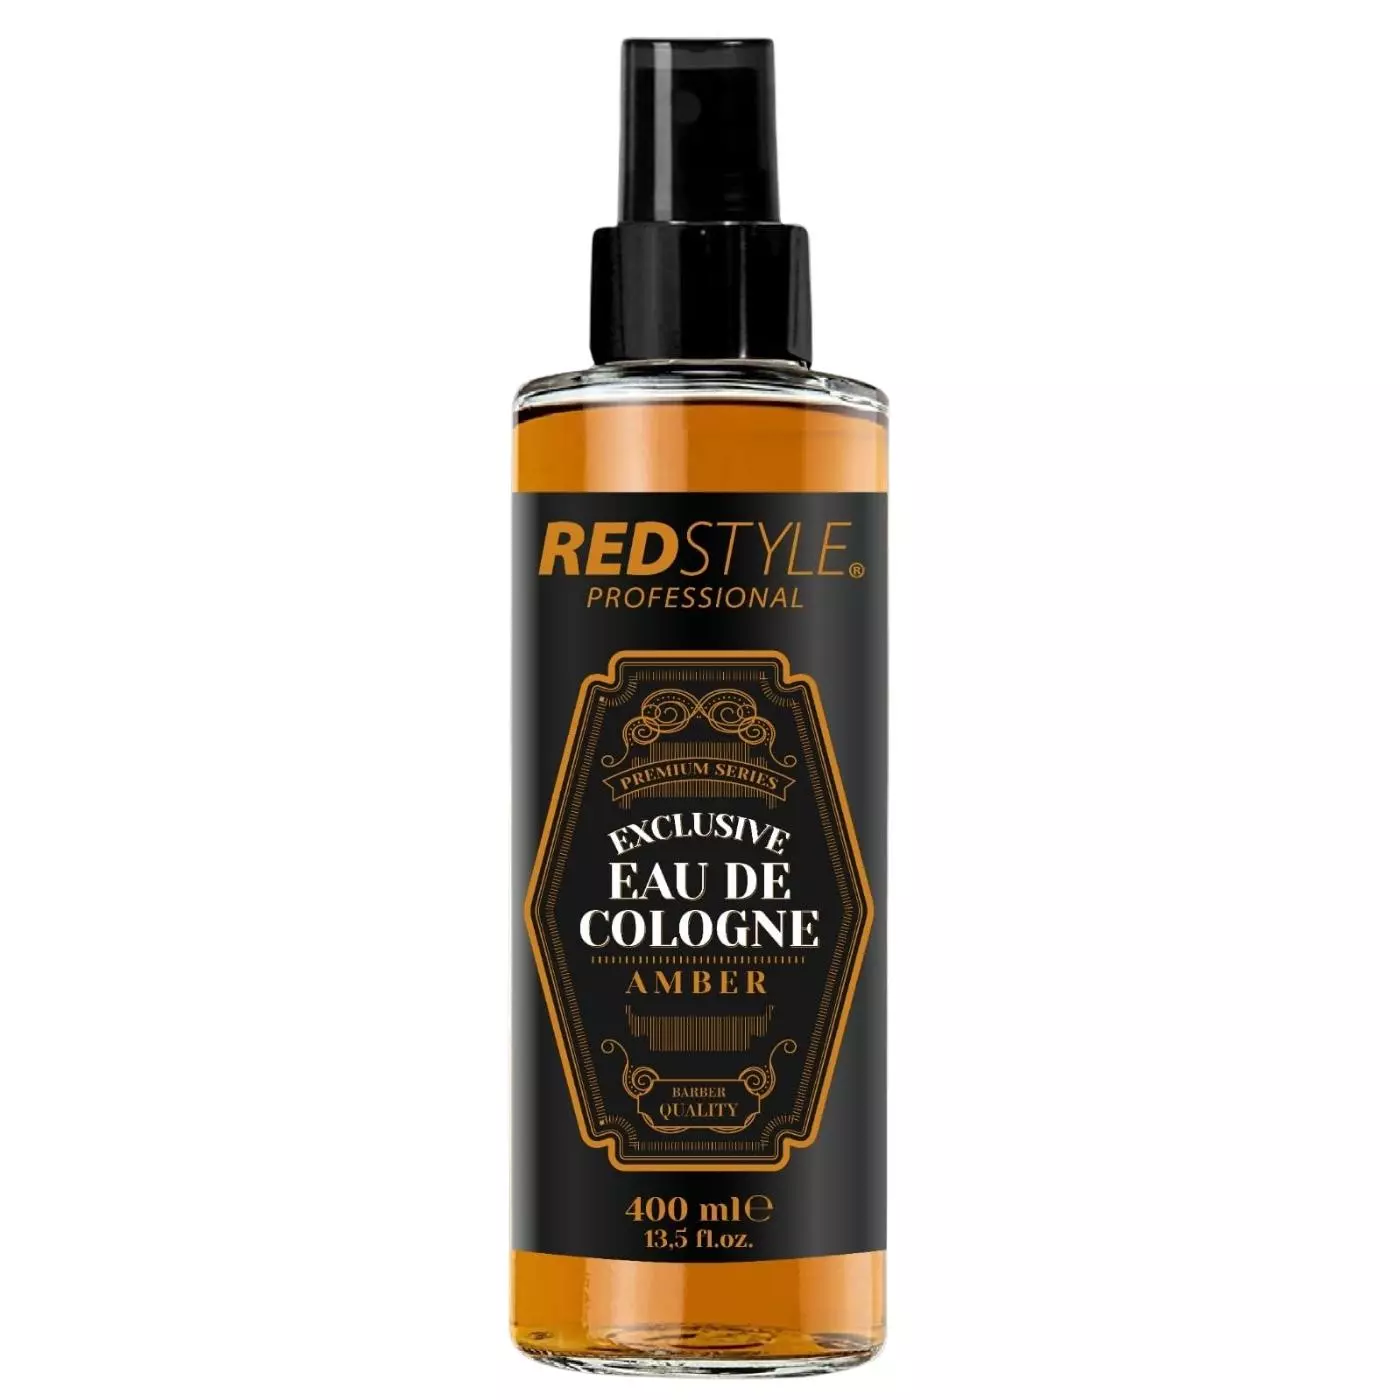 Redstyle Professional Eau de Cologne - After Shave  - Duftwasser - Rasierwasser, kühlt und pflegt amber